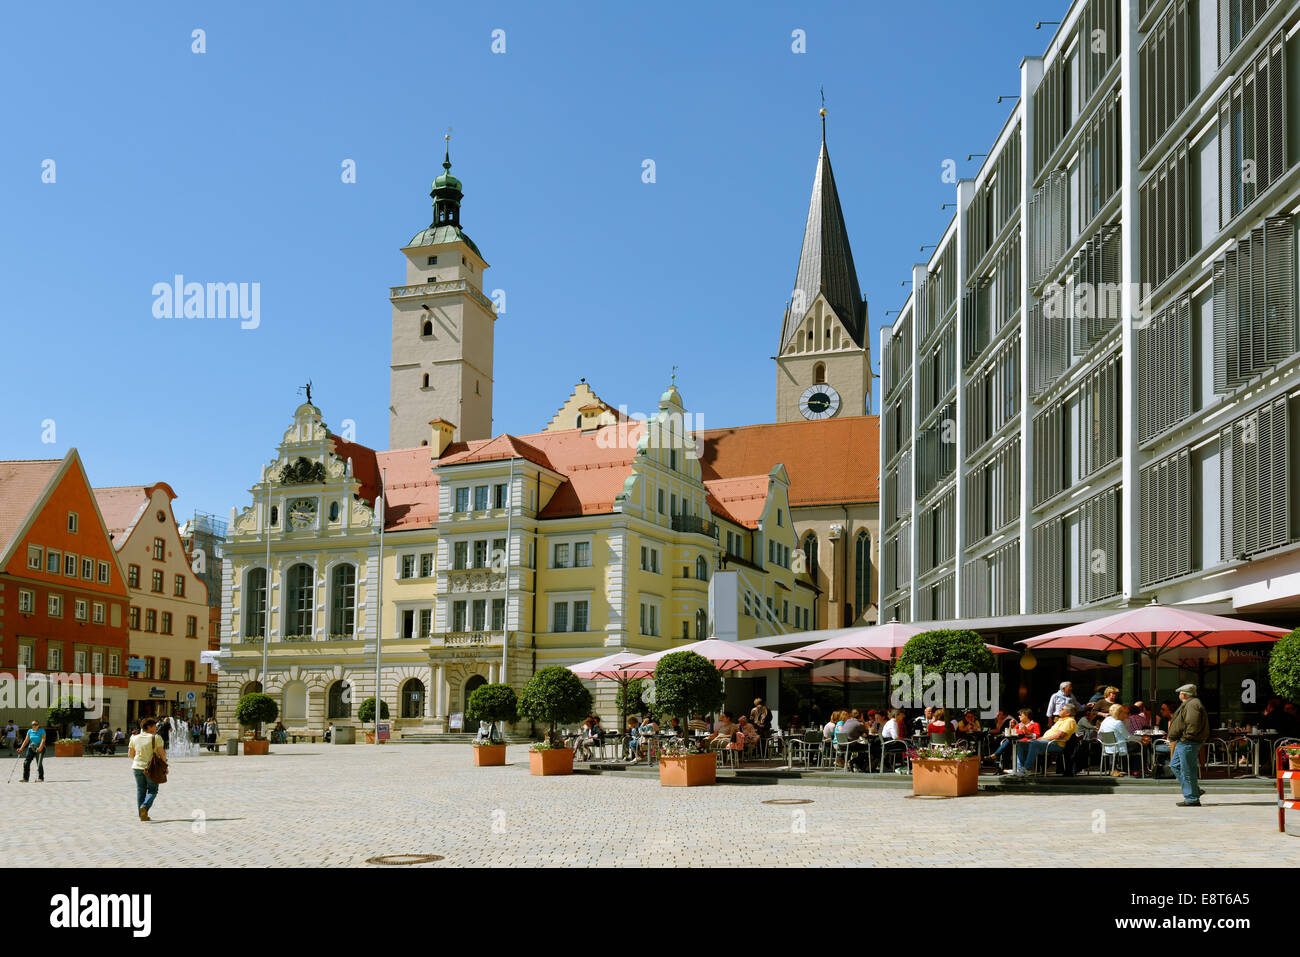 Altes Rathaus mit Pfeifturm, Turm der Pfarrkirche Kirche von St. Moritz, neues Rathaus, Rathausplatz, Ingolstadt Stockfoto